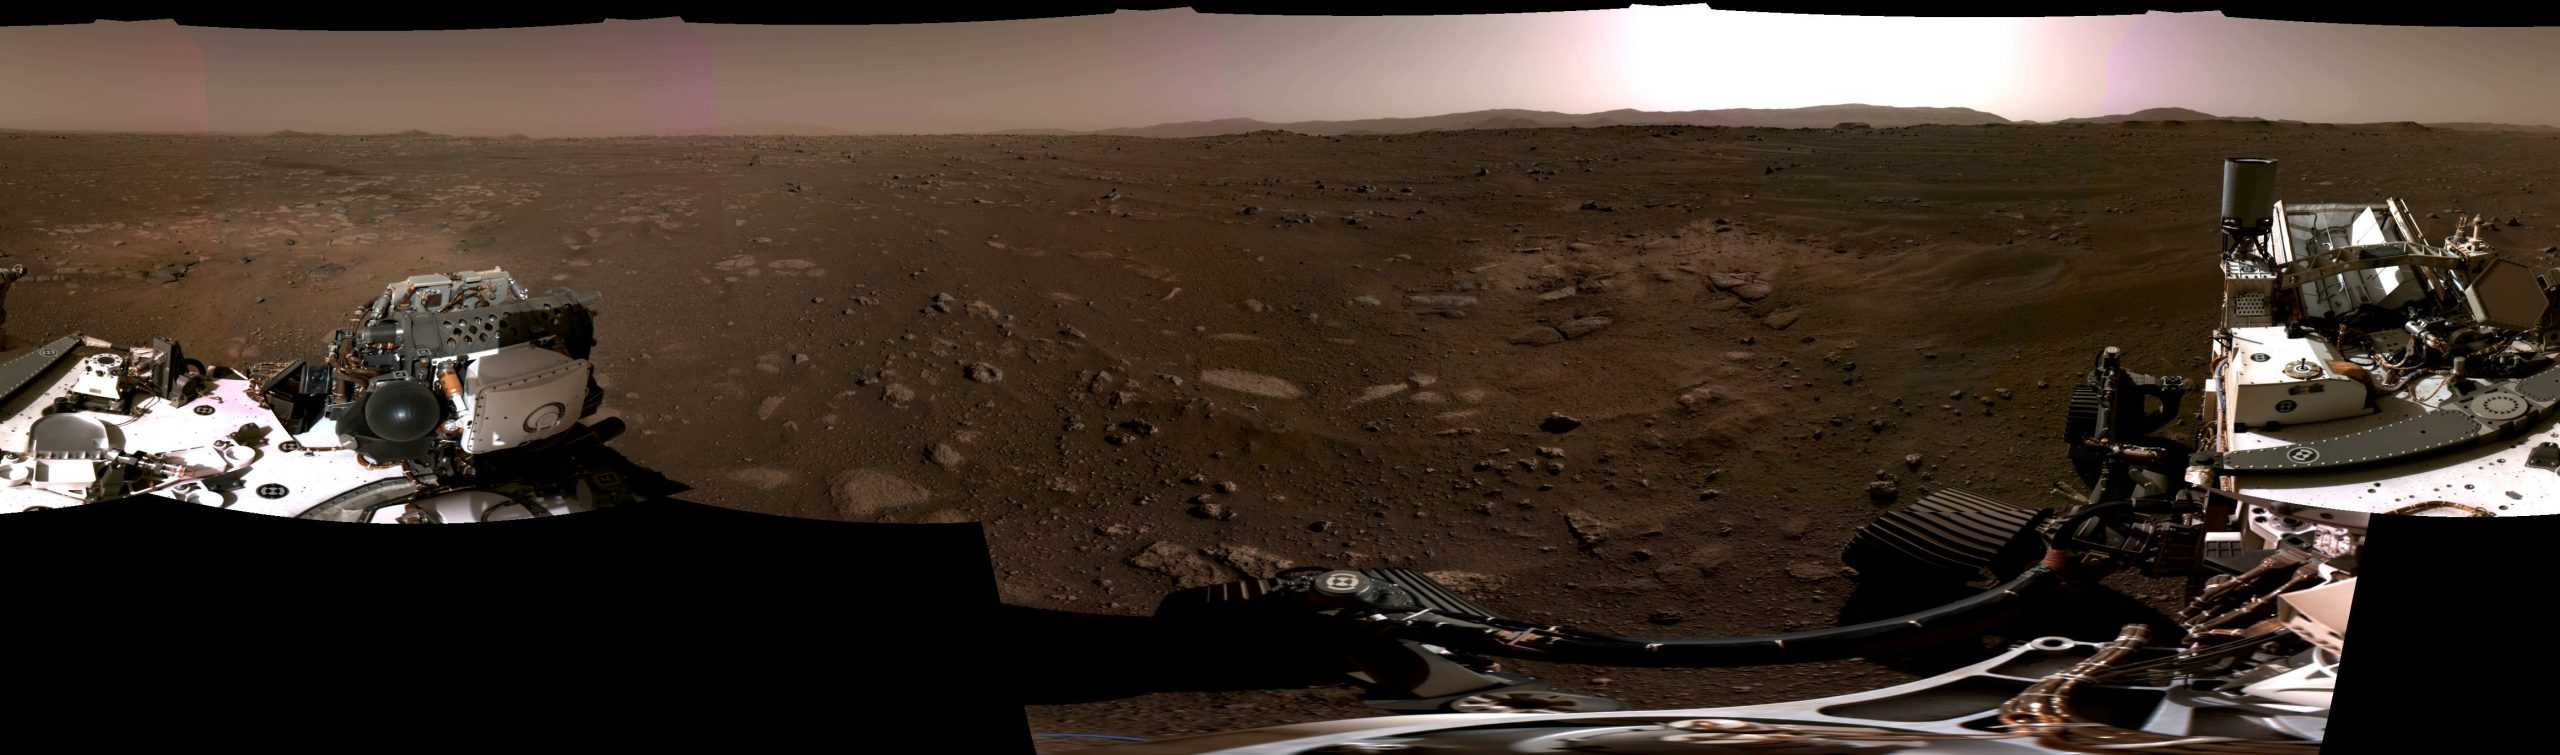 perseverance mars rover panorama jezero crater nasa